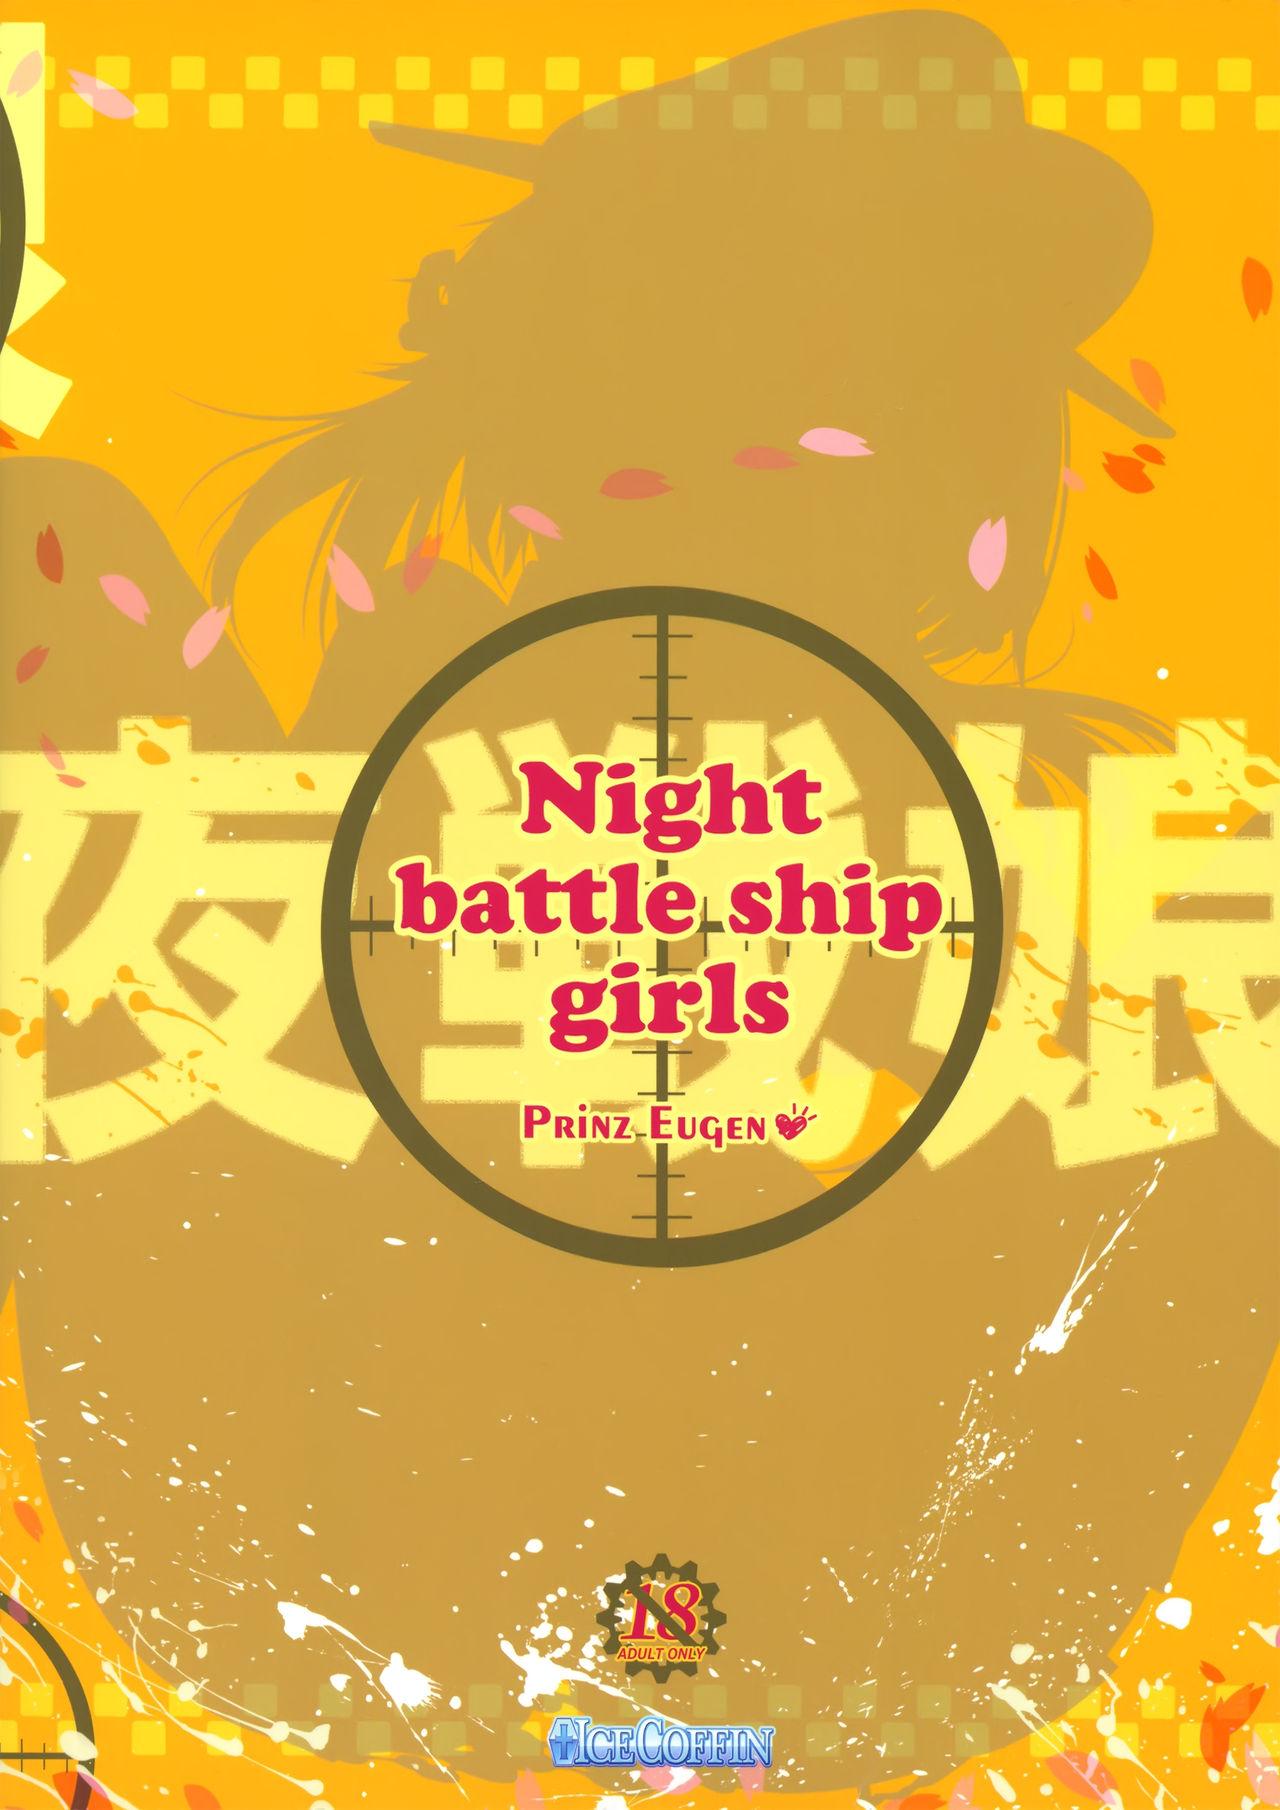 Night battle ship girls 26